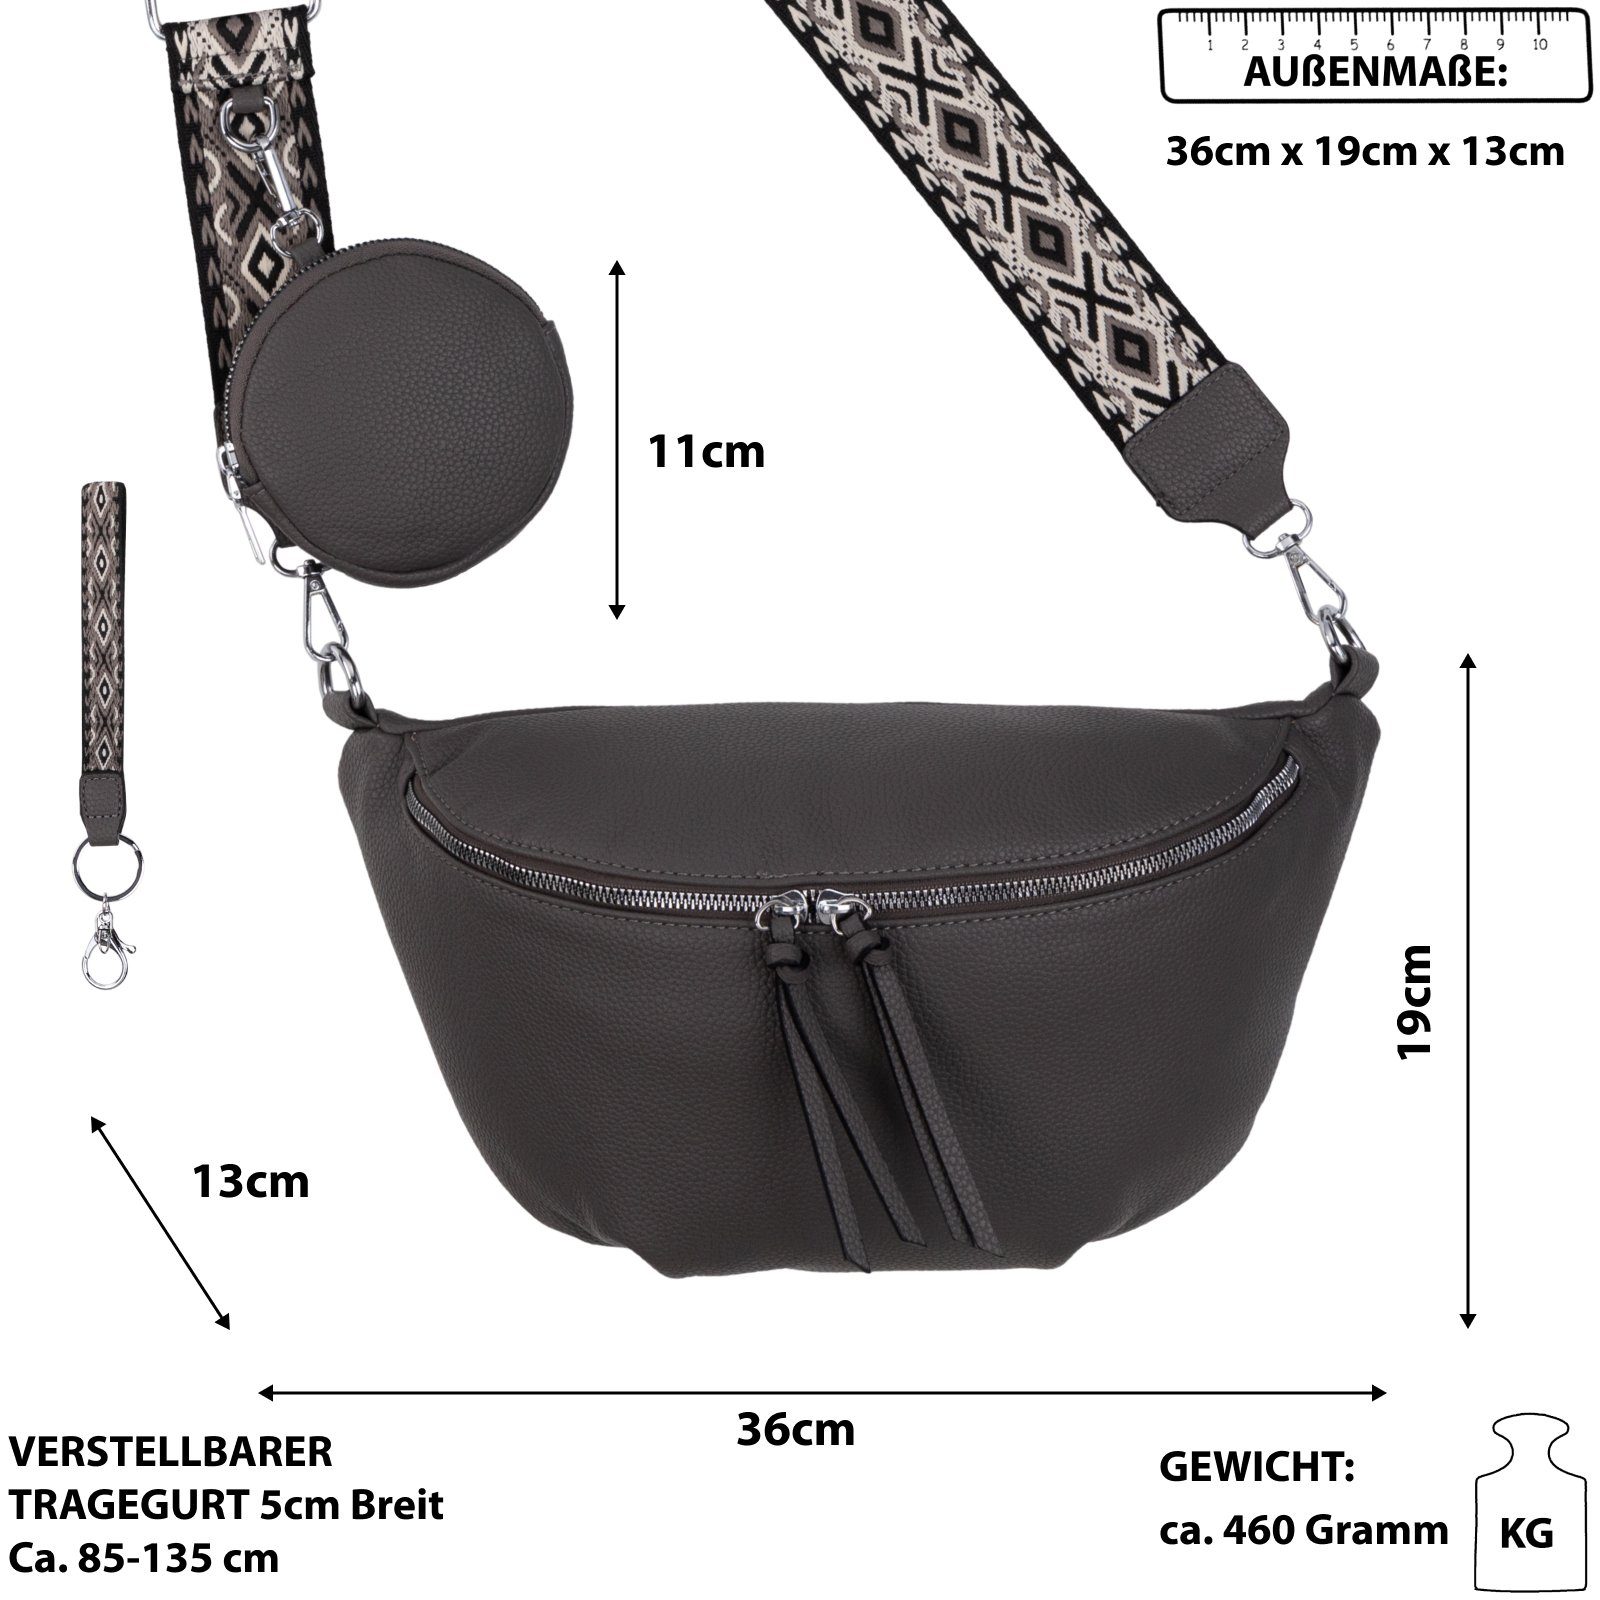 Italy-D, Bauchtasche Hüfttasche D.GREY Schultertasche, tragbar Umhängetasche Gürteltasche Crossbody-Bag CrossOver, als Kunstleder EAAKIE Umhängetasche